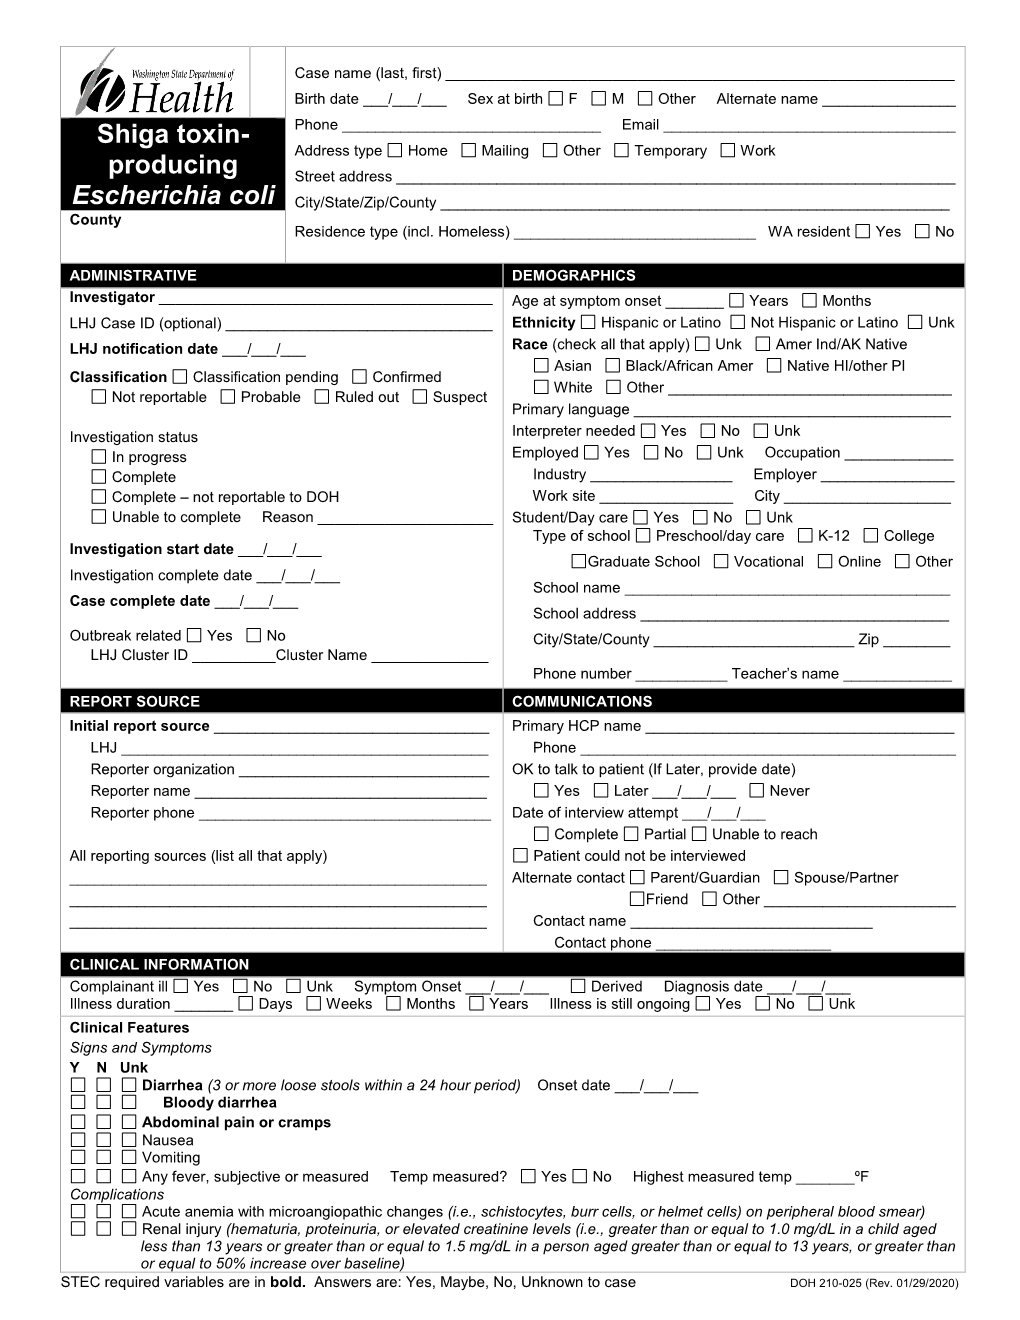 Reporting Form for Shiga Toxn-Producing Escherichia Coli